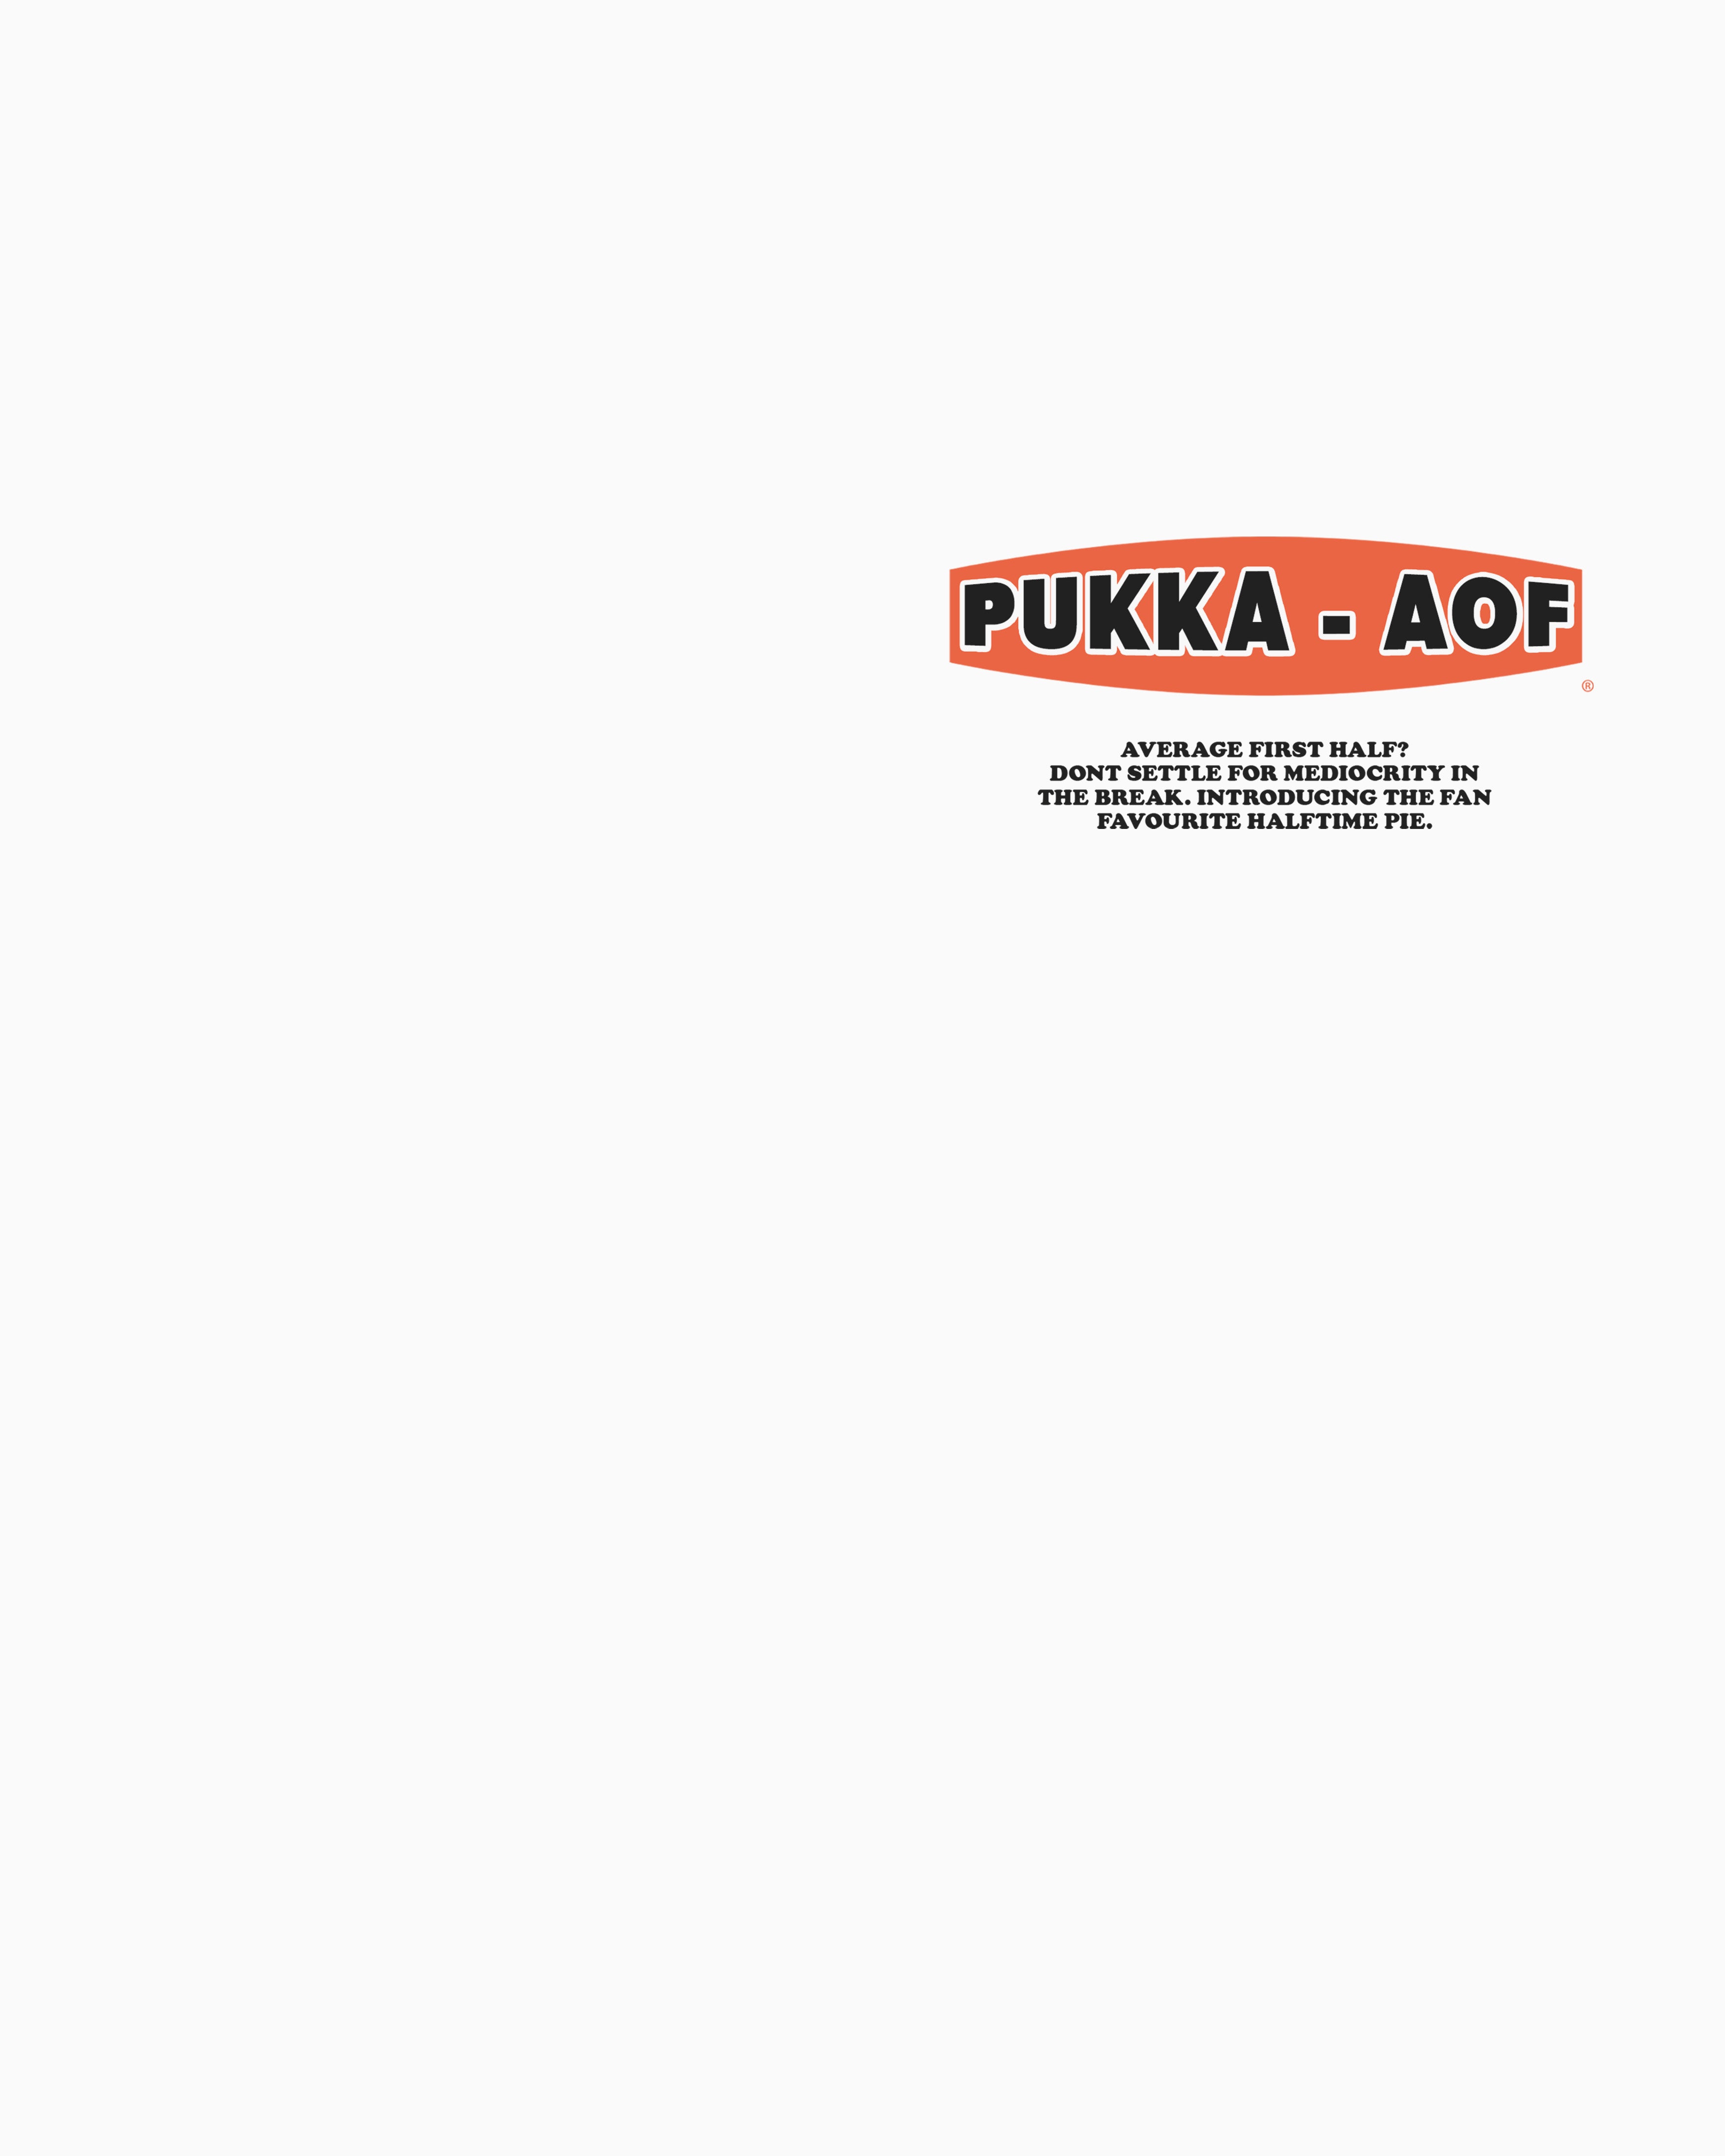 AOF x Pukka's Halftime Pie